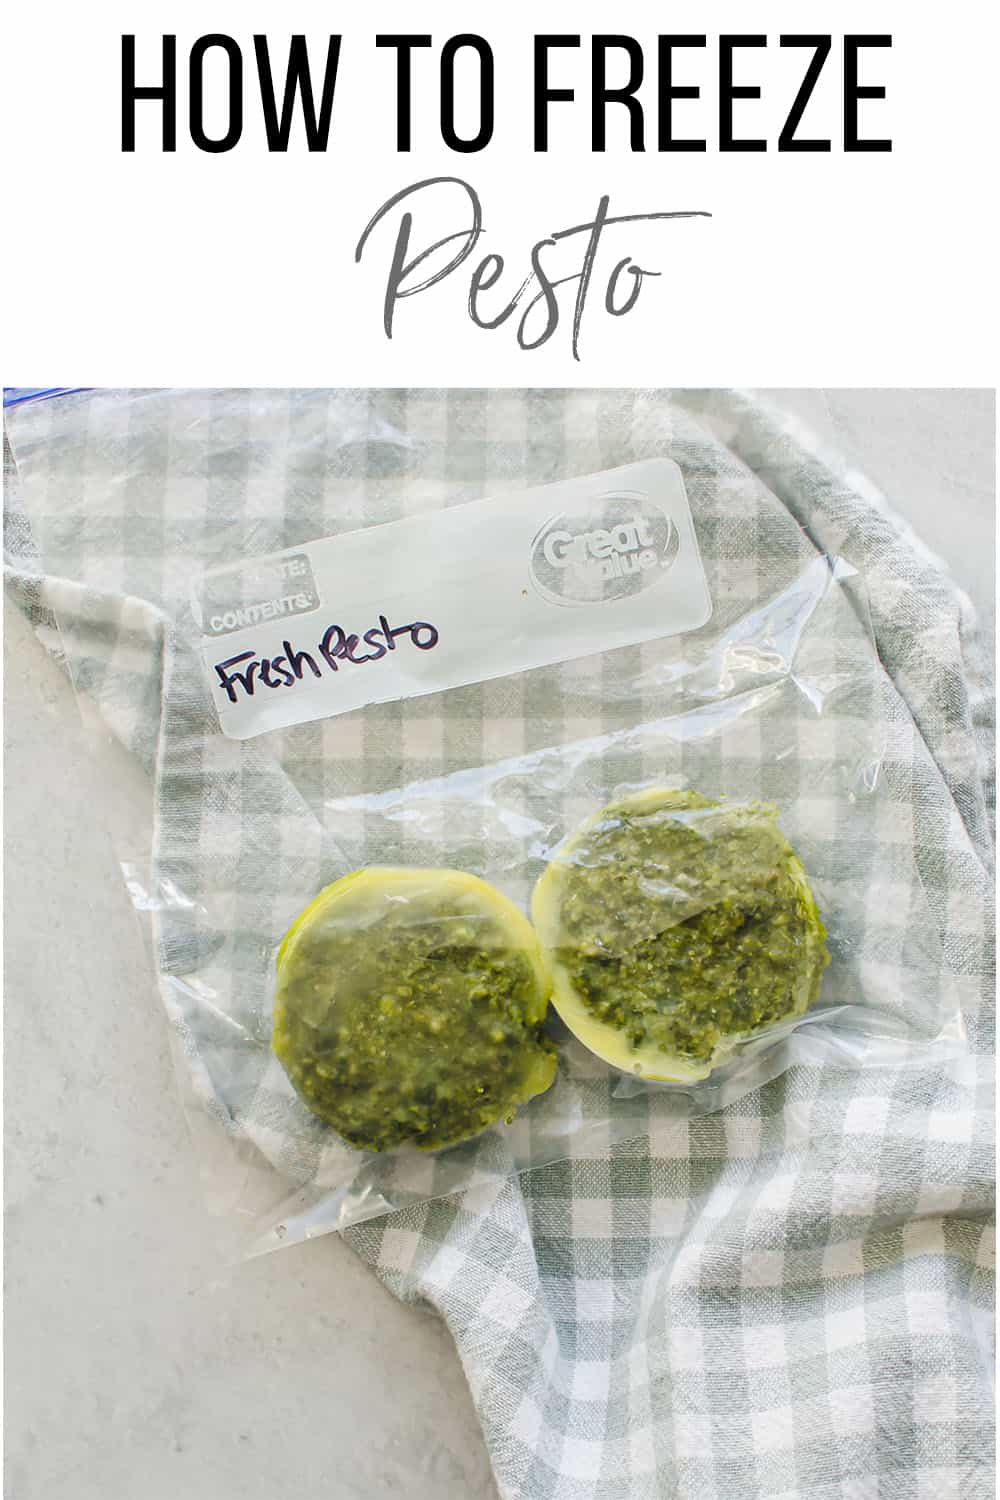 frozen pesto in a freezer bag